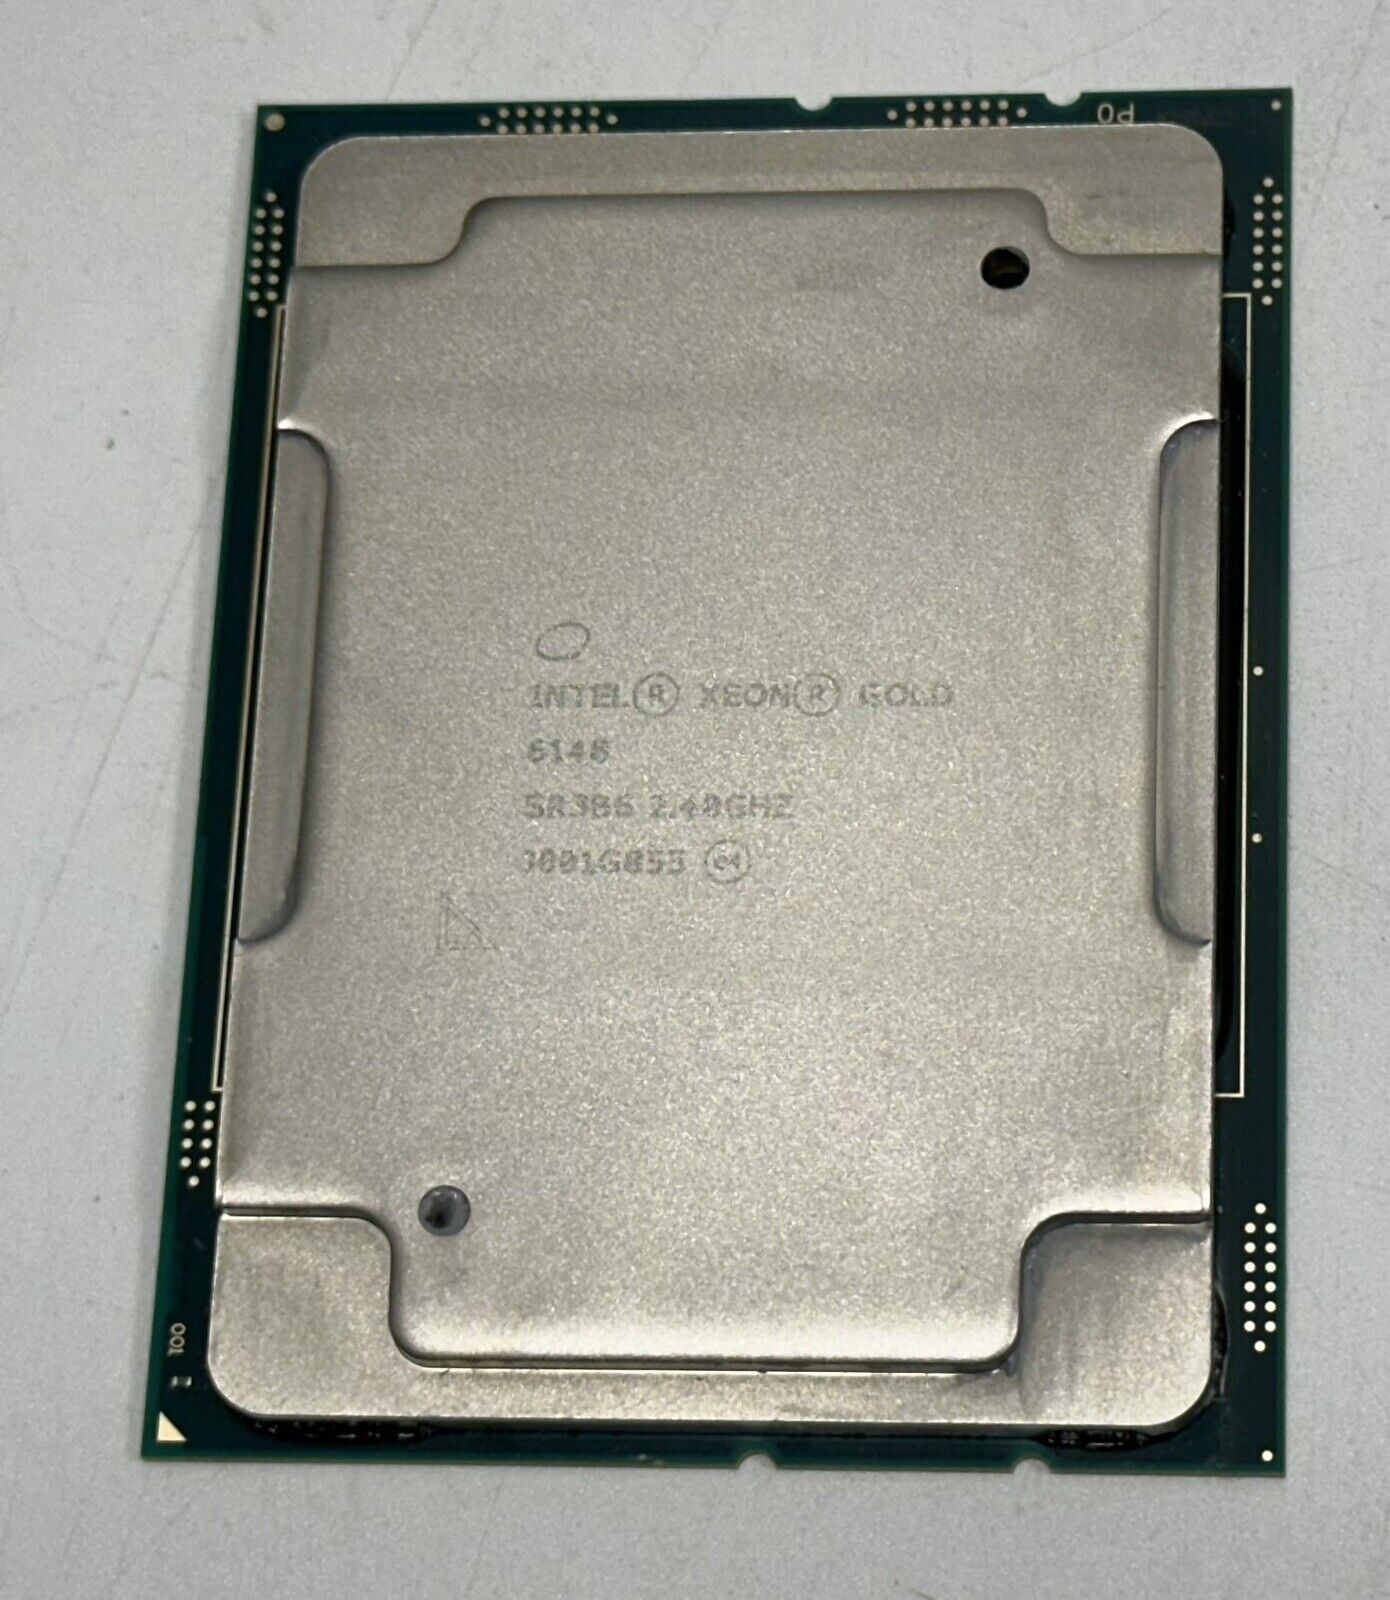 INTEL XEON GOLD 6148 20 Core SR3B6 2.4GHZ 27.5 MB L3 Cache CPU